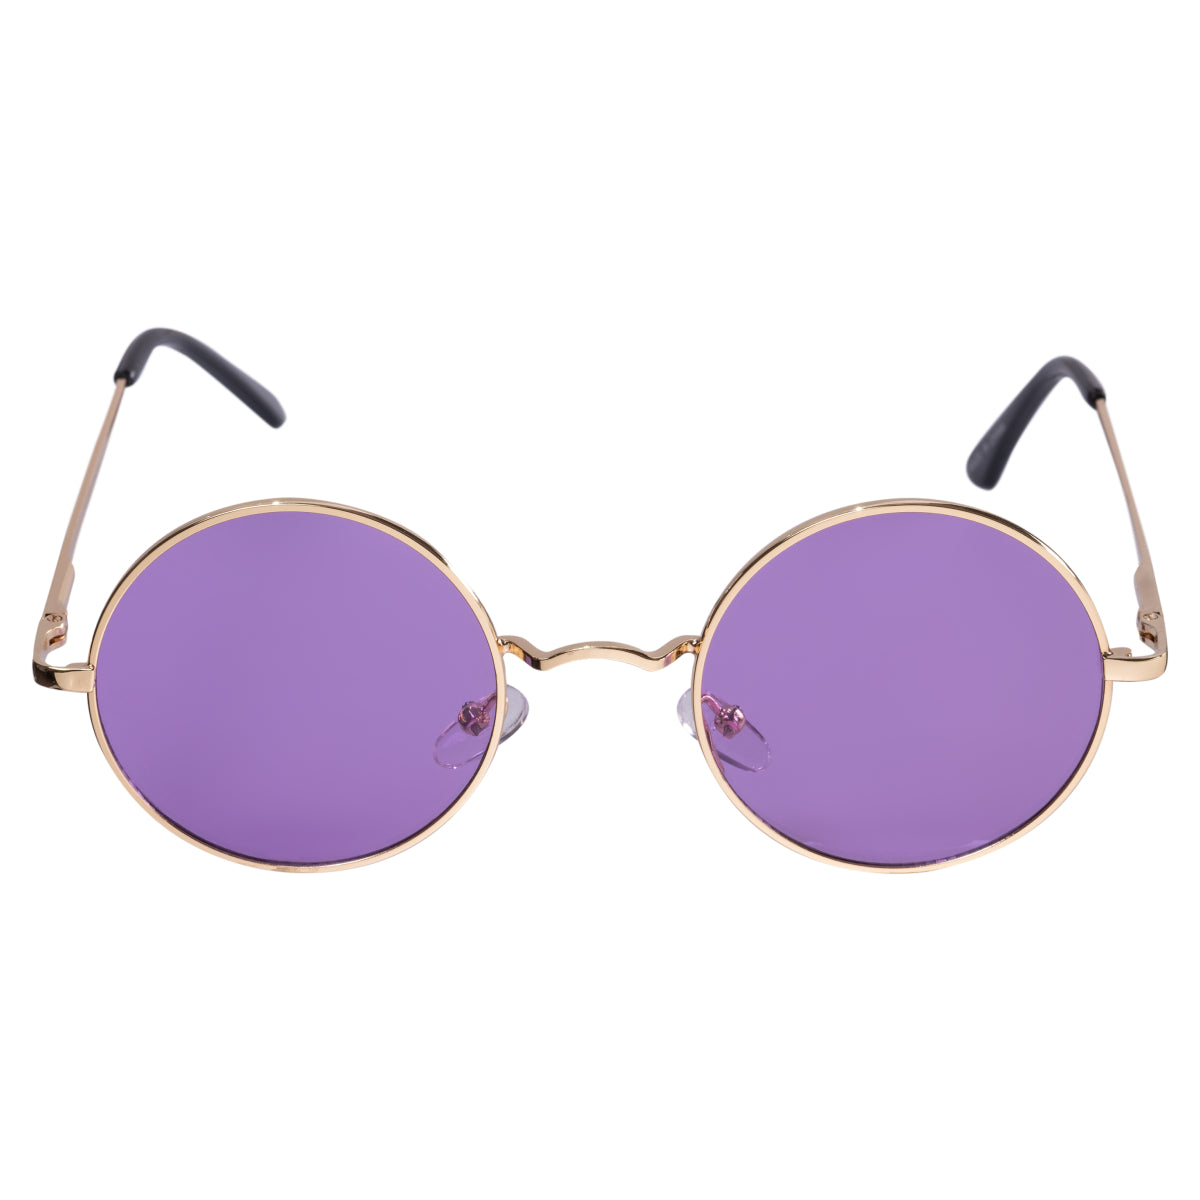 John Lennon Vintage Round Sunglasses Costume Accessory - Purple